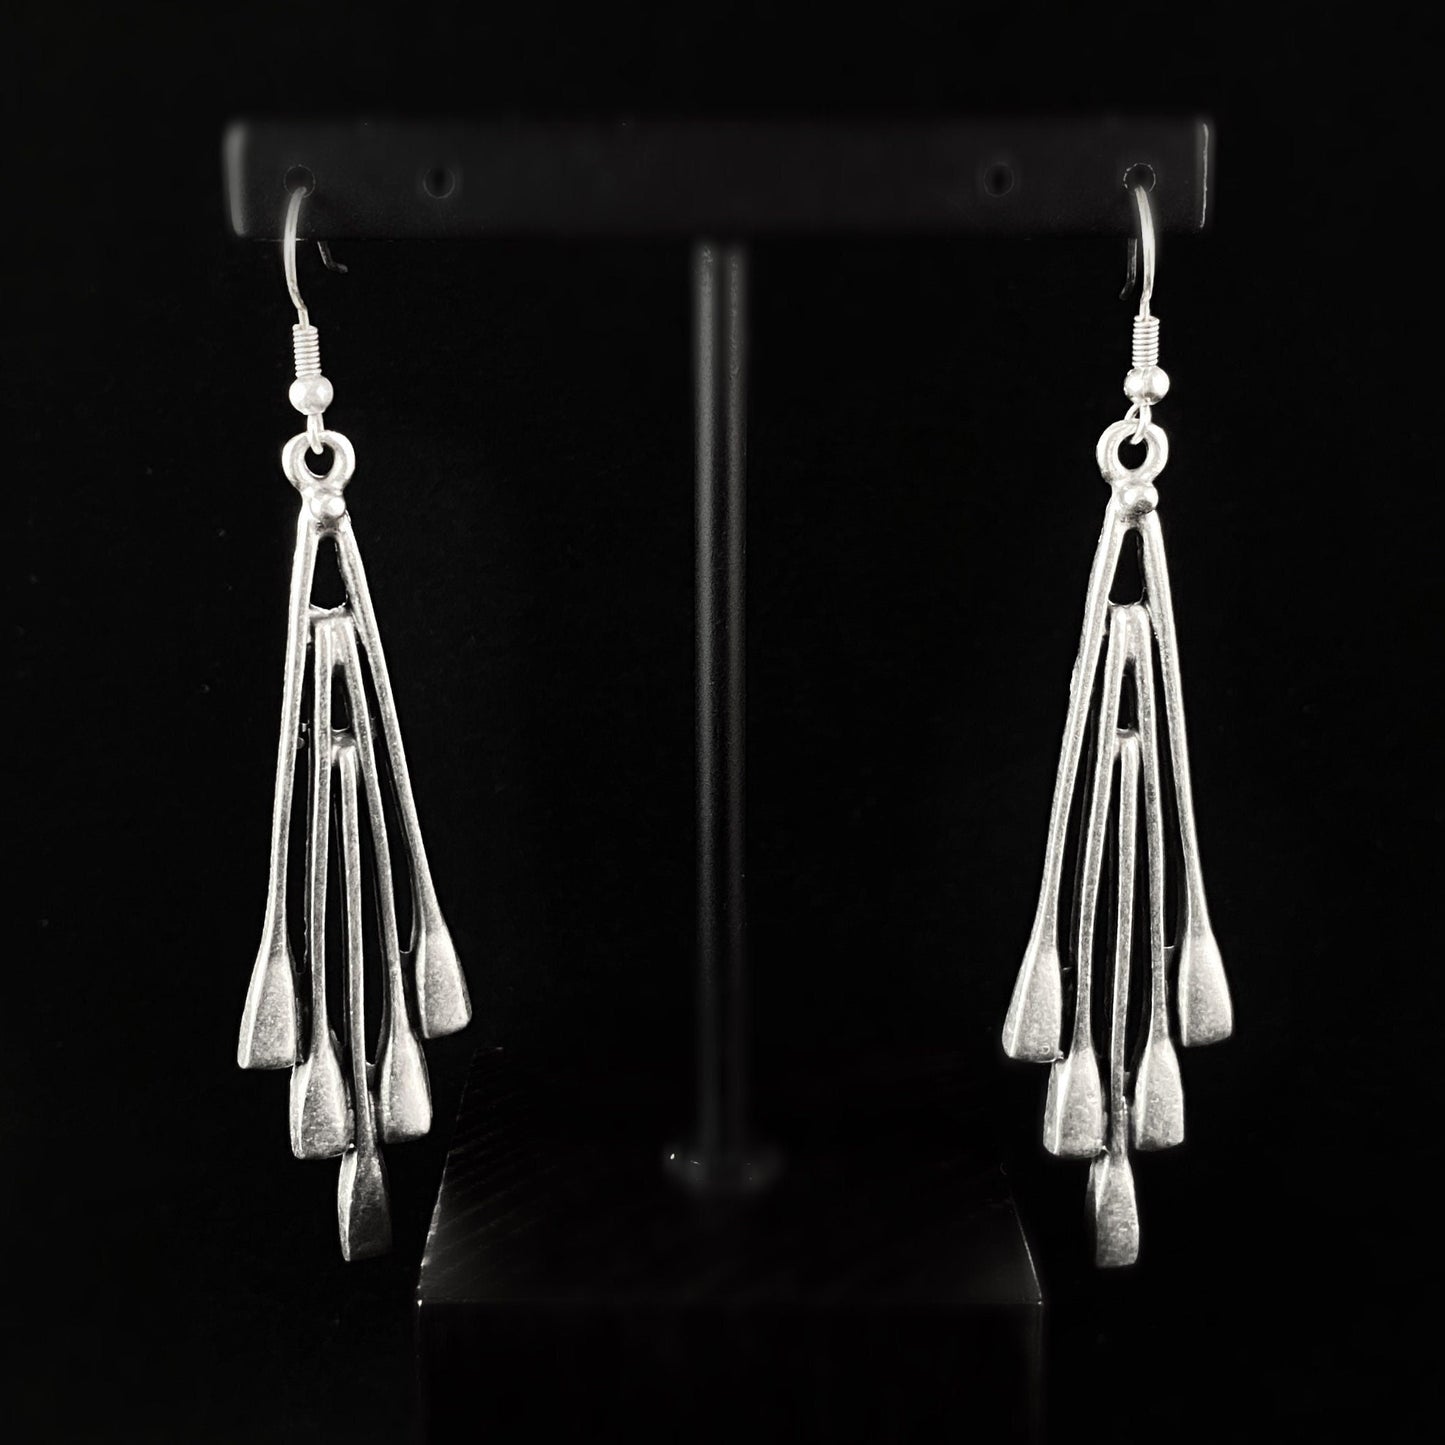 Silver Abstract Waterfall Drop Earrings, Handmade, Nickel Free - Elegant Minimalist Jewelry for Women